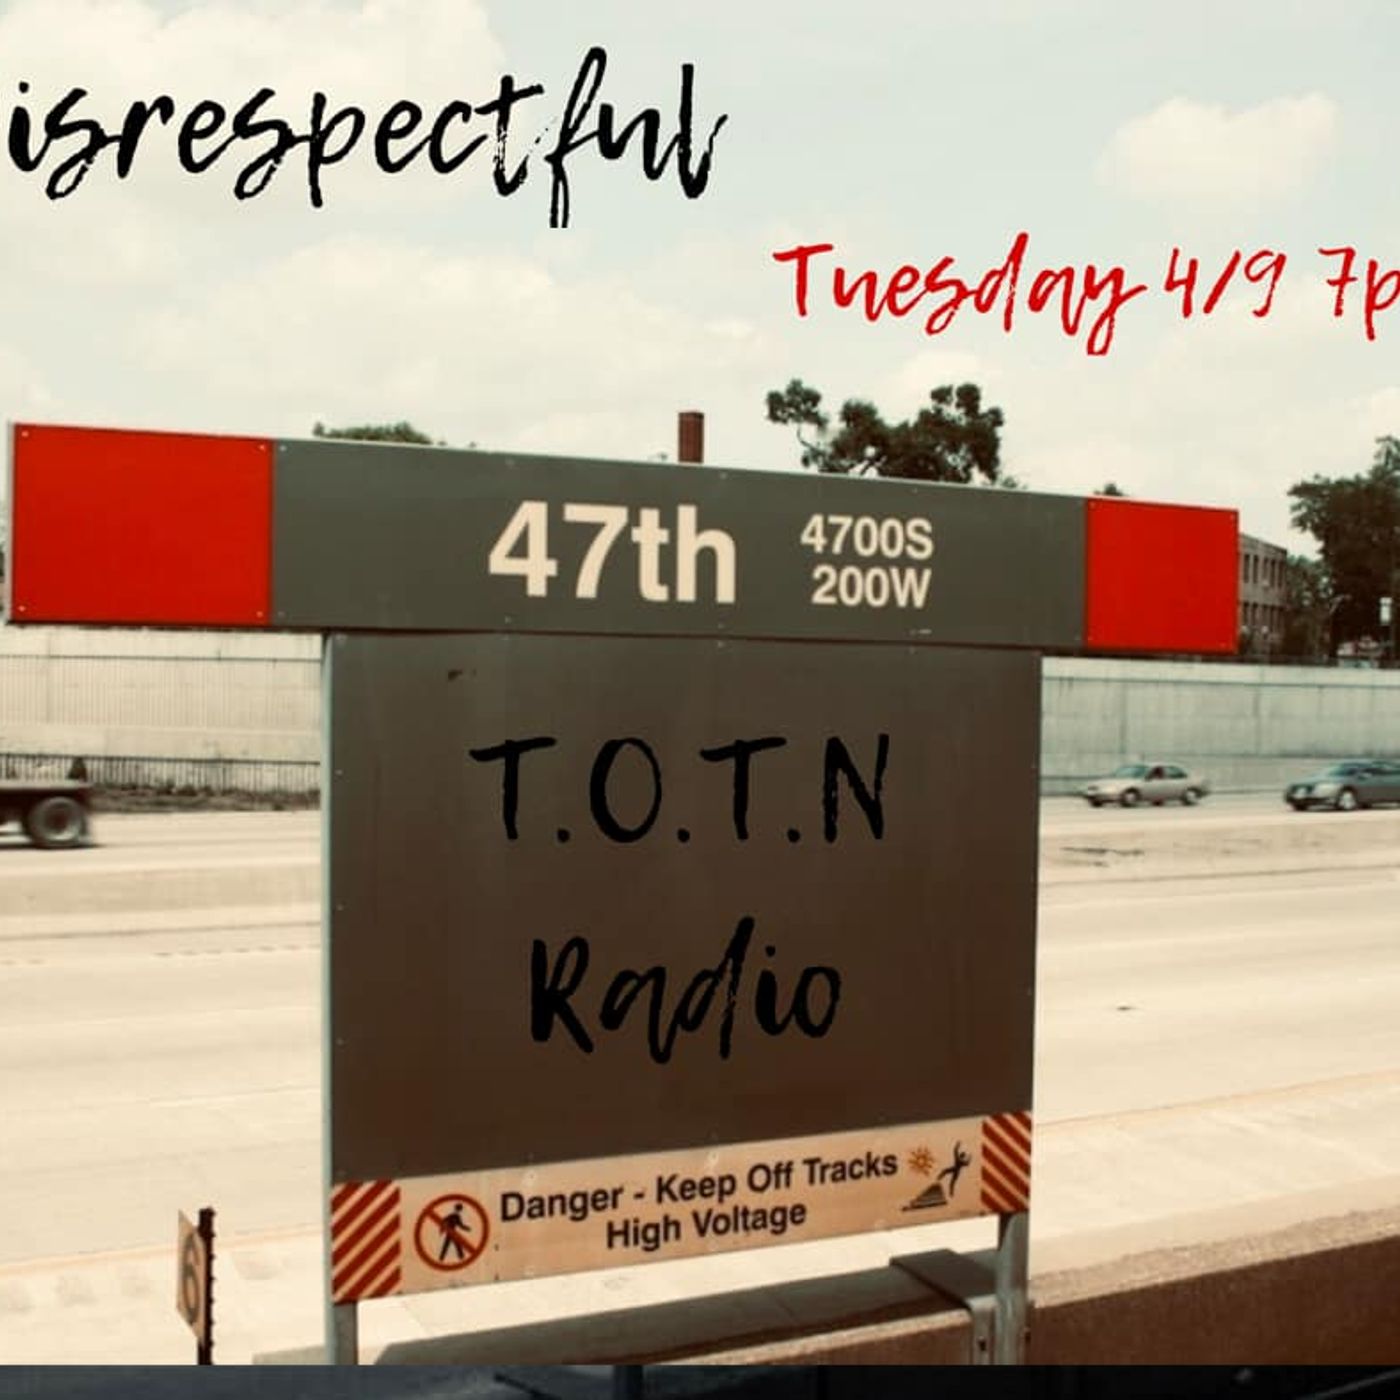 Episode #7 | 47th Street - "Disrespect"